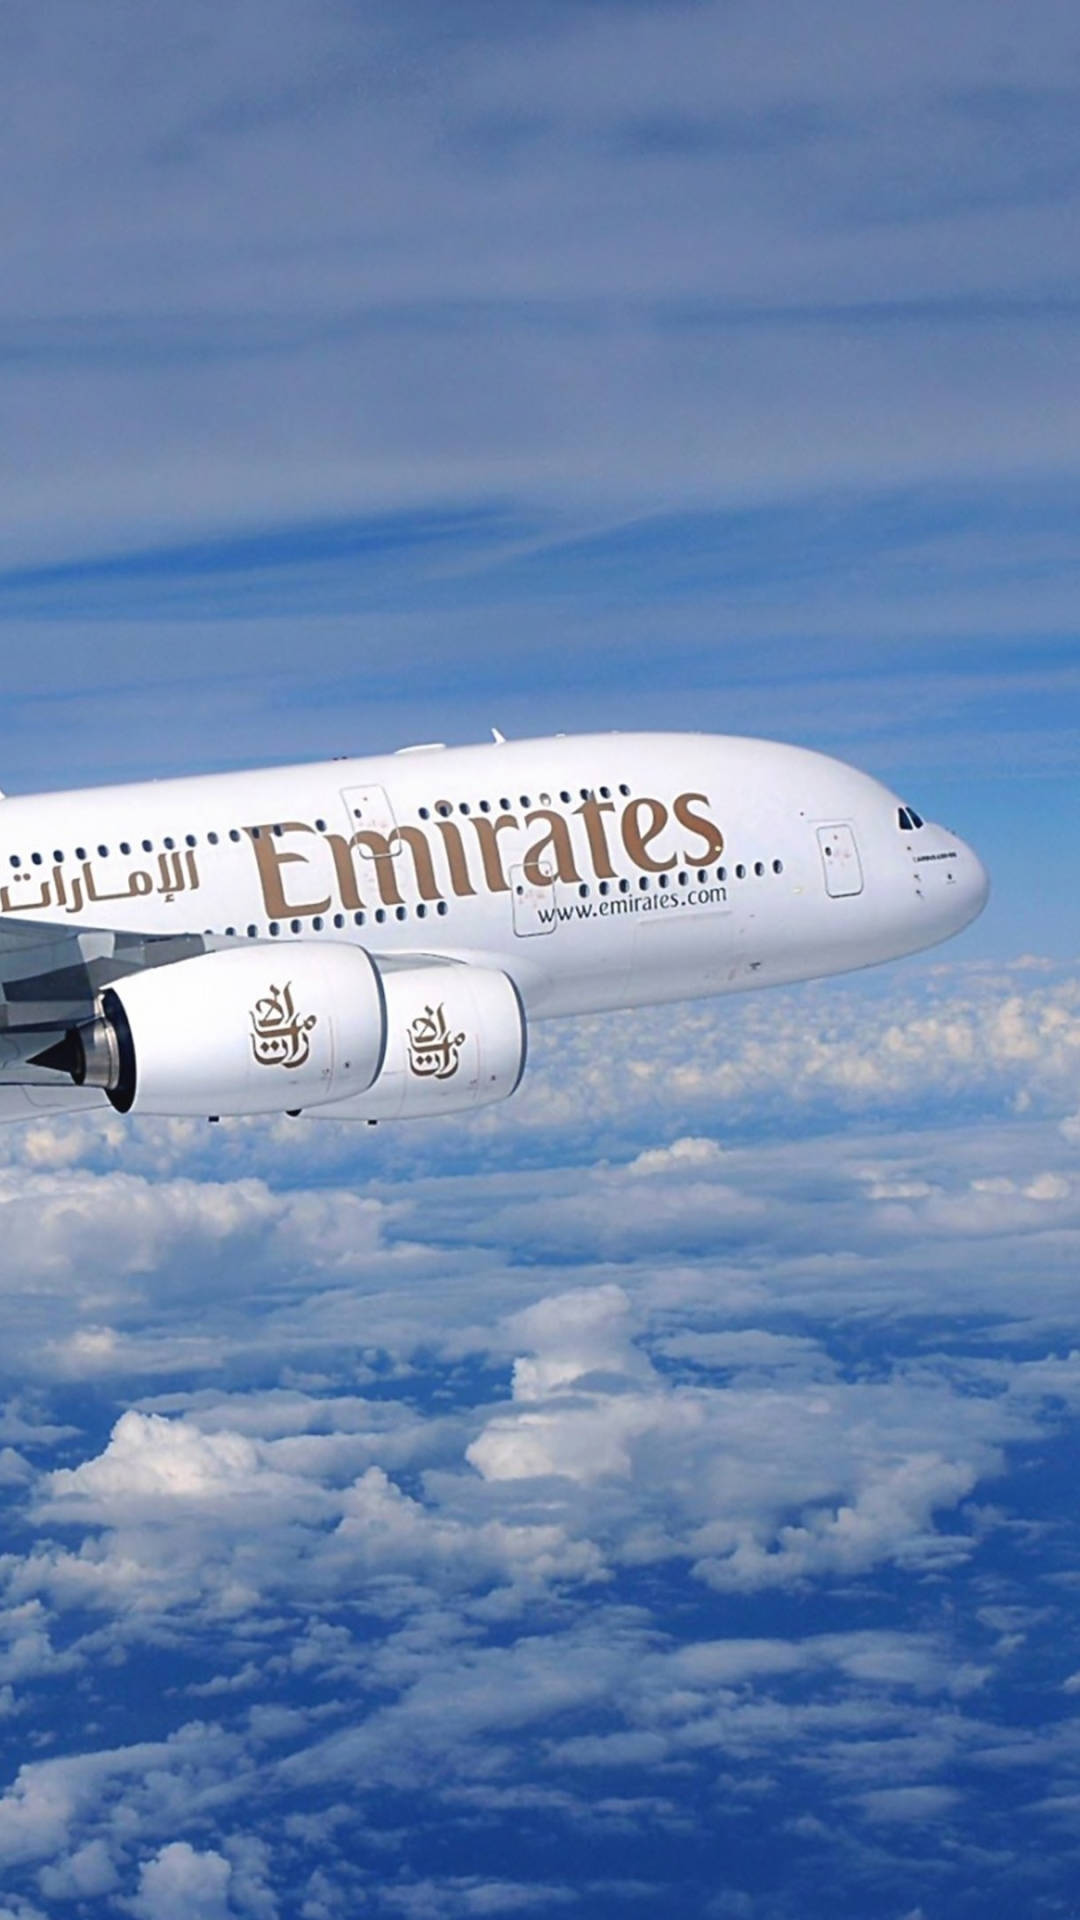 Emiratesa380 Vola Nel Cielo Blu Sfondo